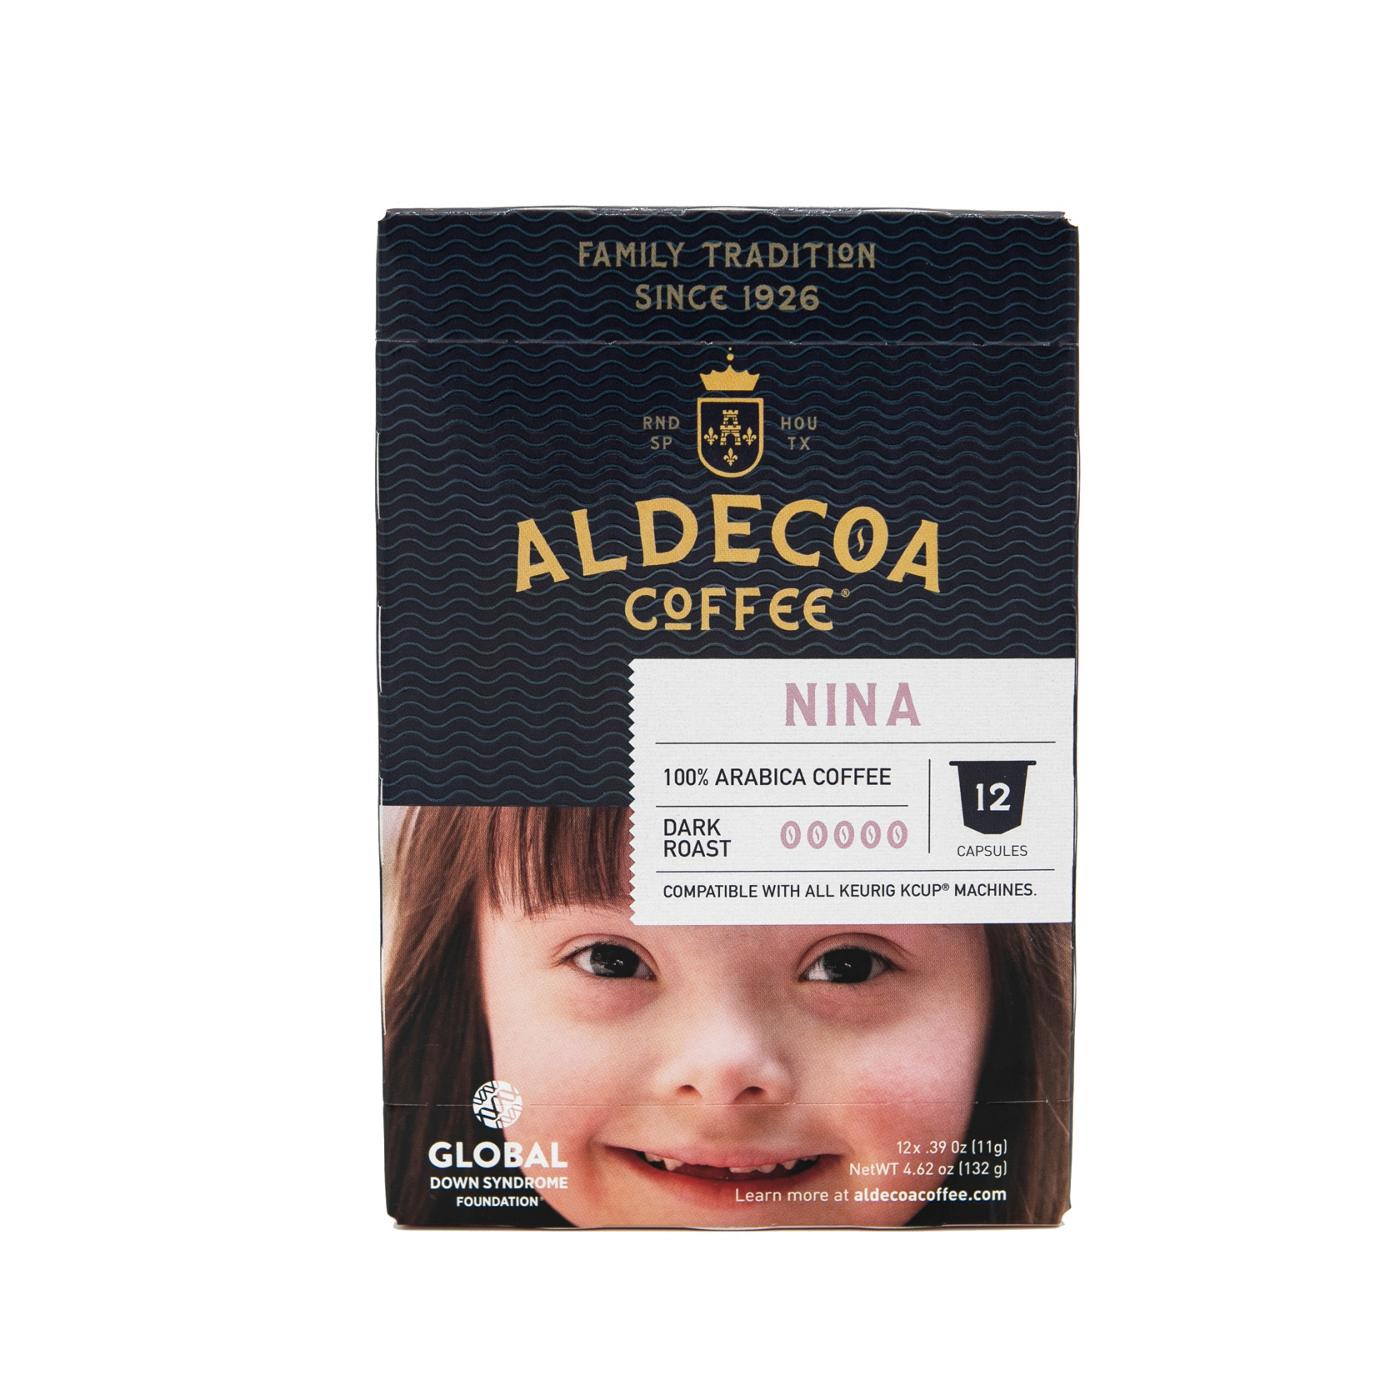 Aldecoa Nina Dark Roast Single Serve Coffee Capsules; image 1 of 2